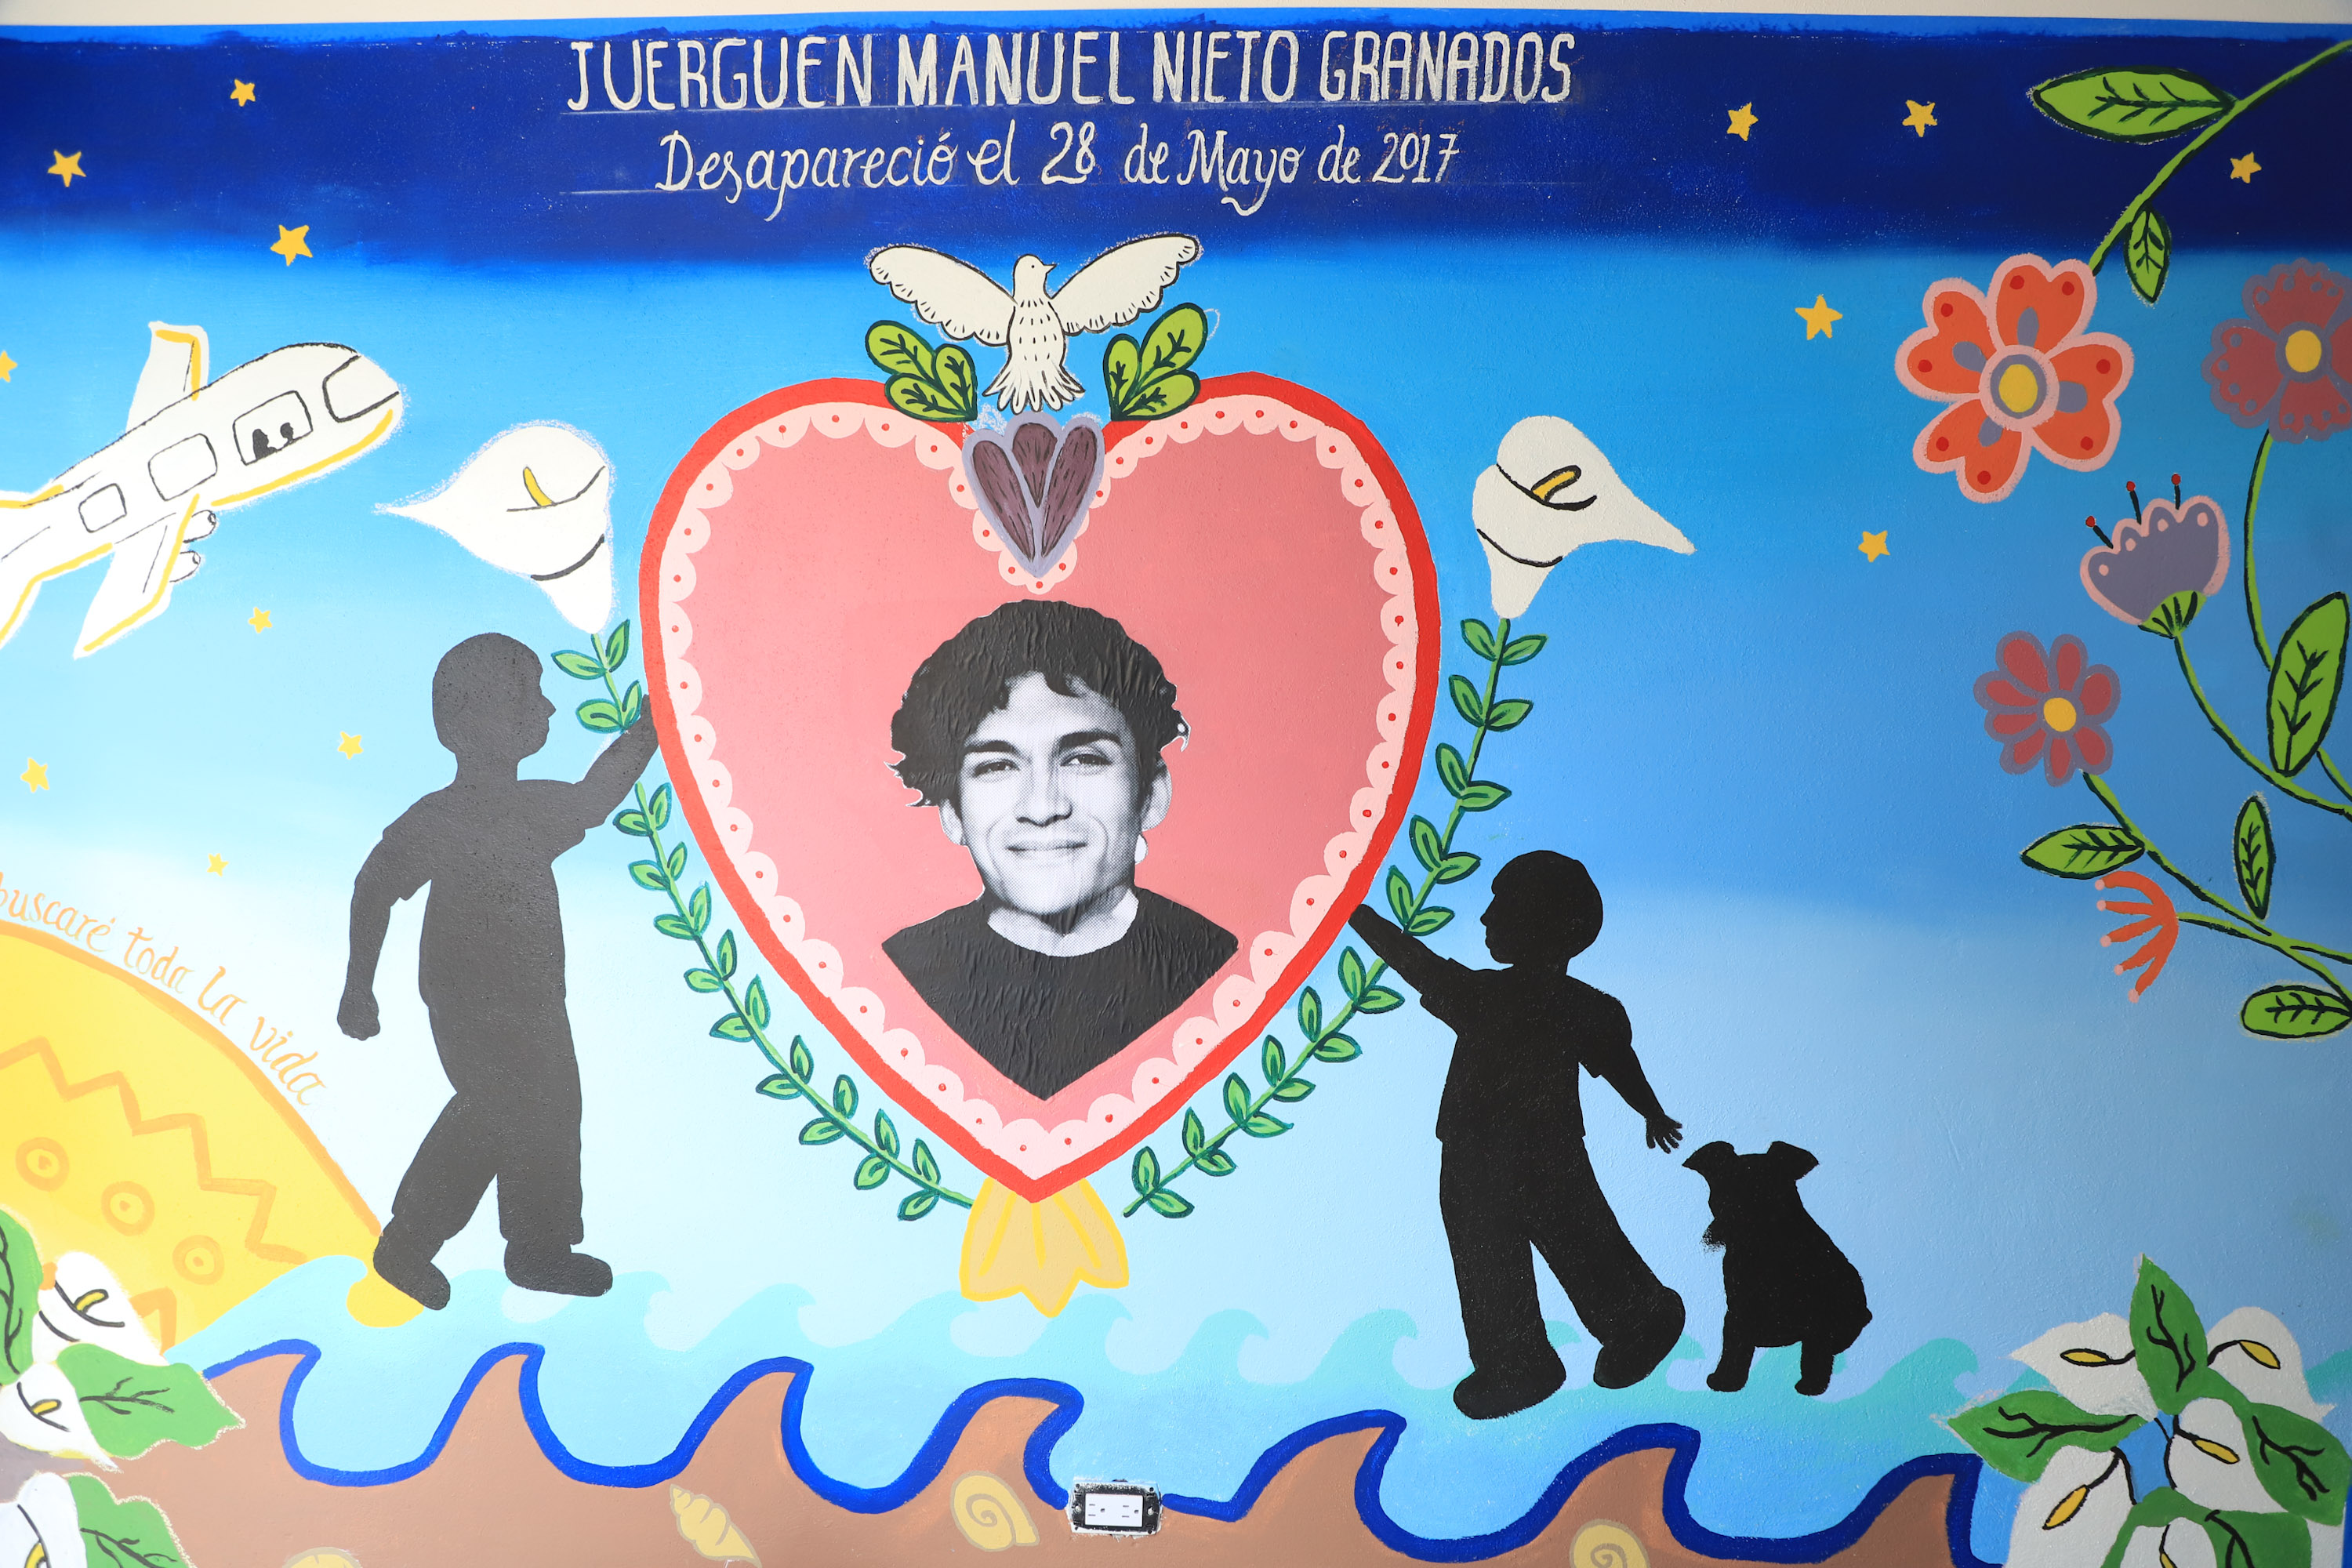 Plasman mural en honor a Jurguen Manuel Nieto